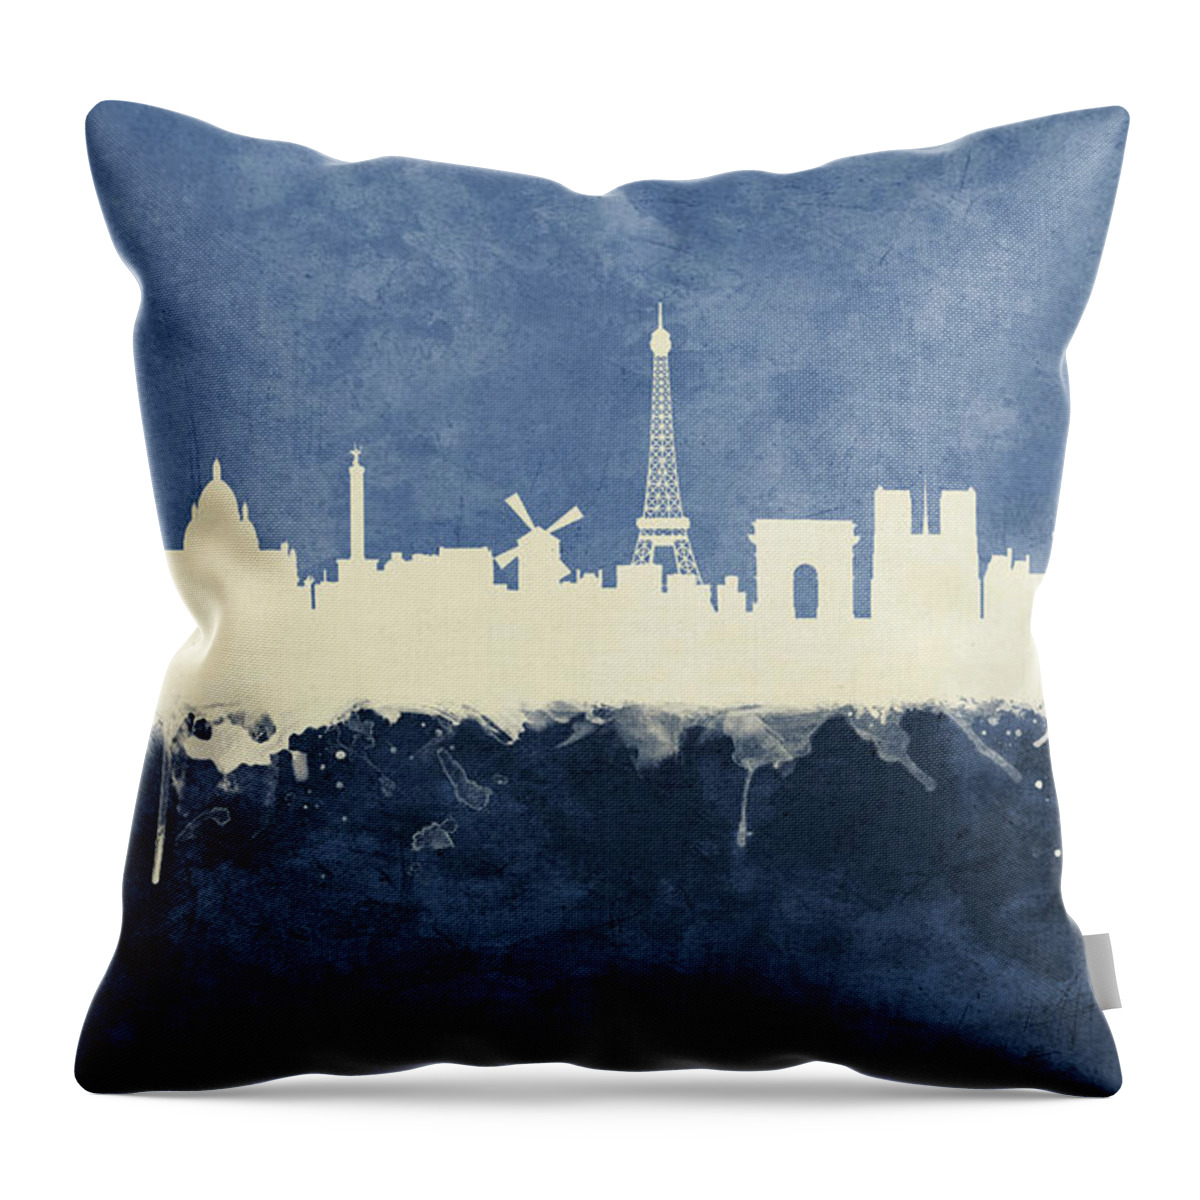 Paris Throw Pillow featuring the digital art Paris France Skyline #17 by Michael Tompsett